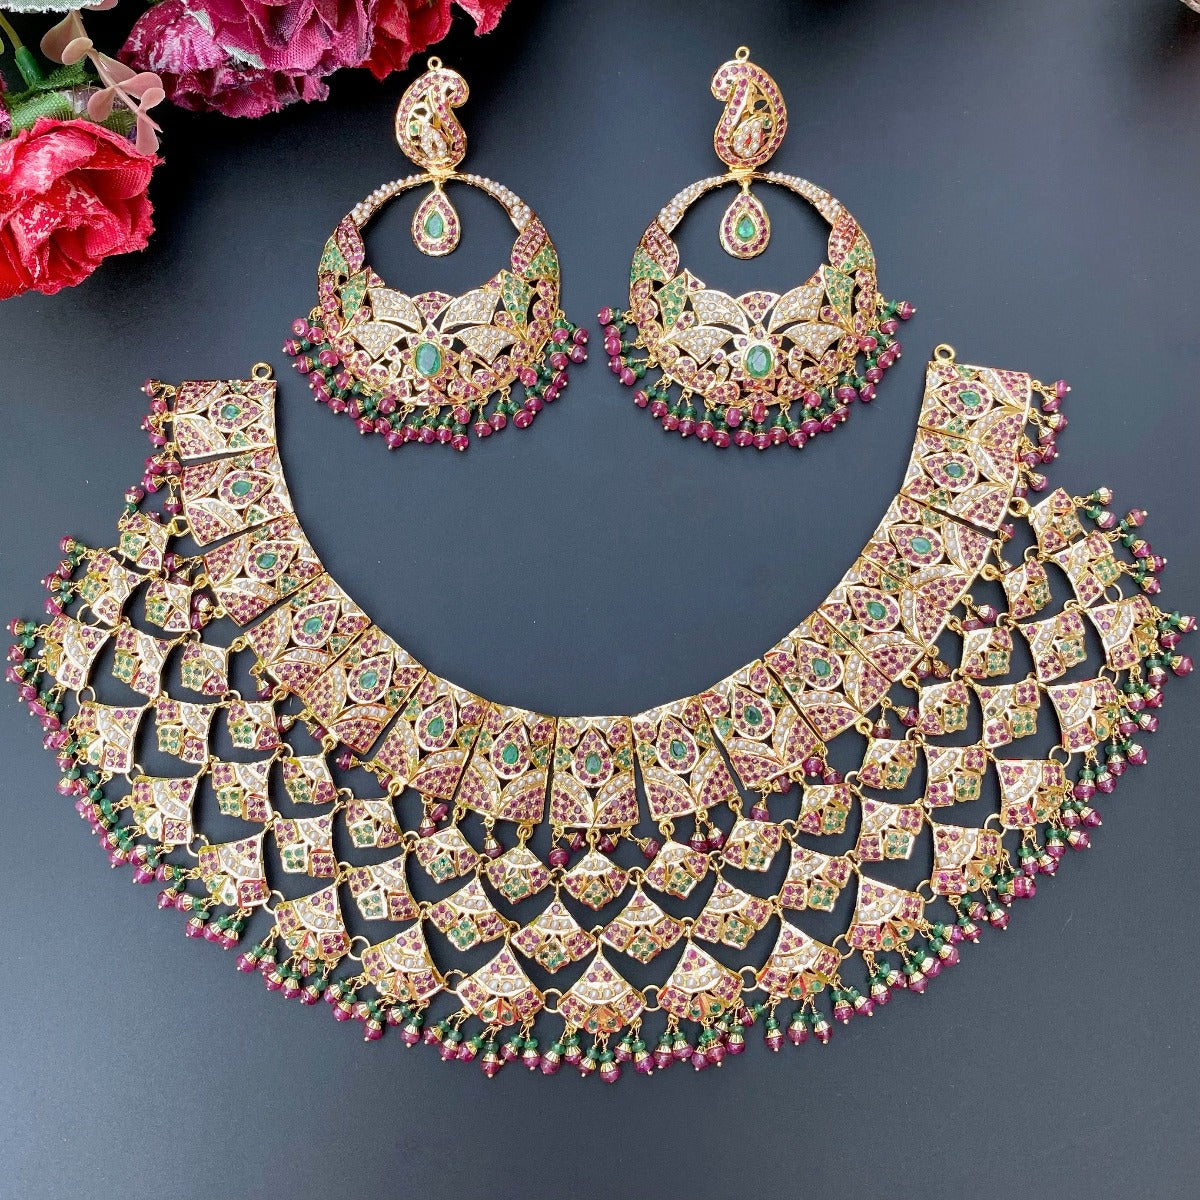 heavy rajputana bridal necklace with chandbali earrings studded with rajasthani jadau with precious stones